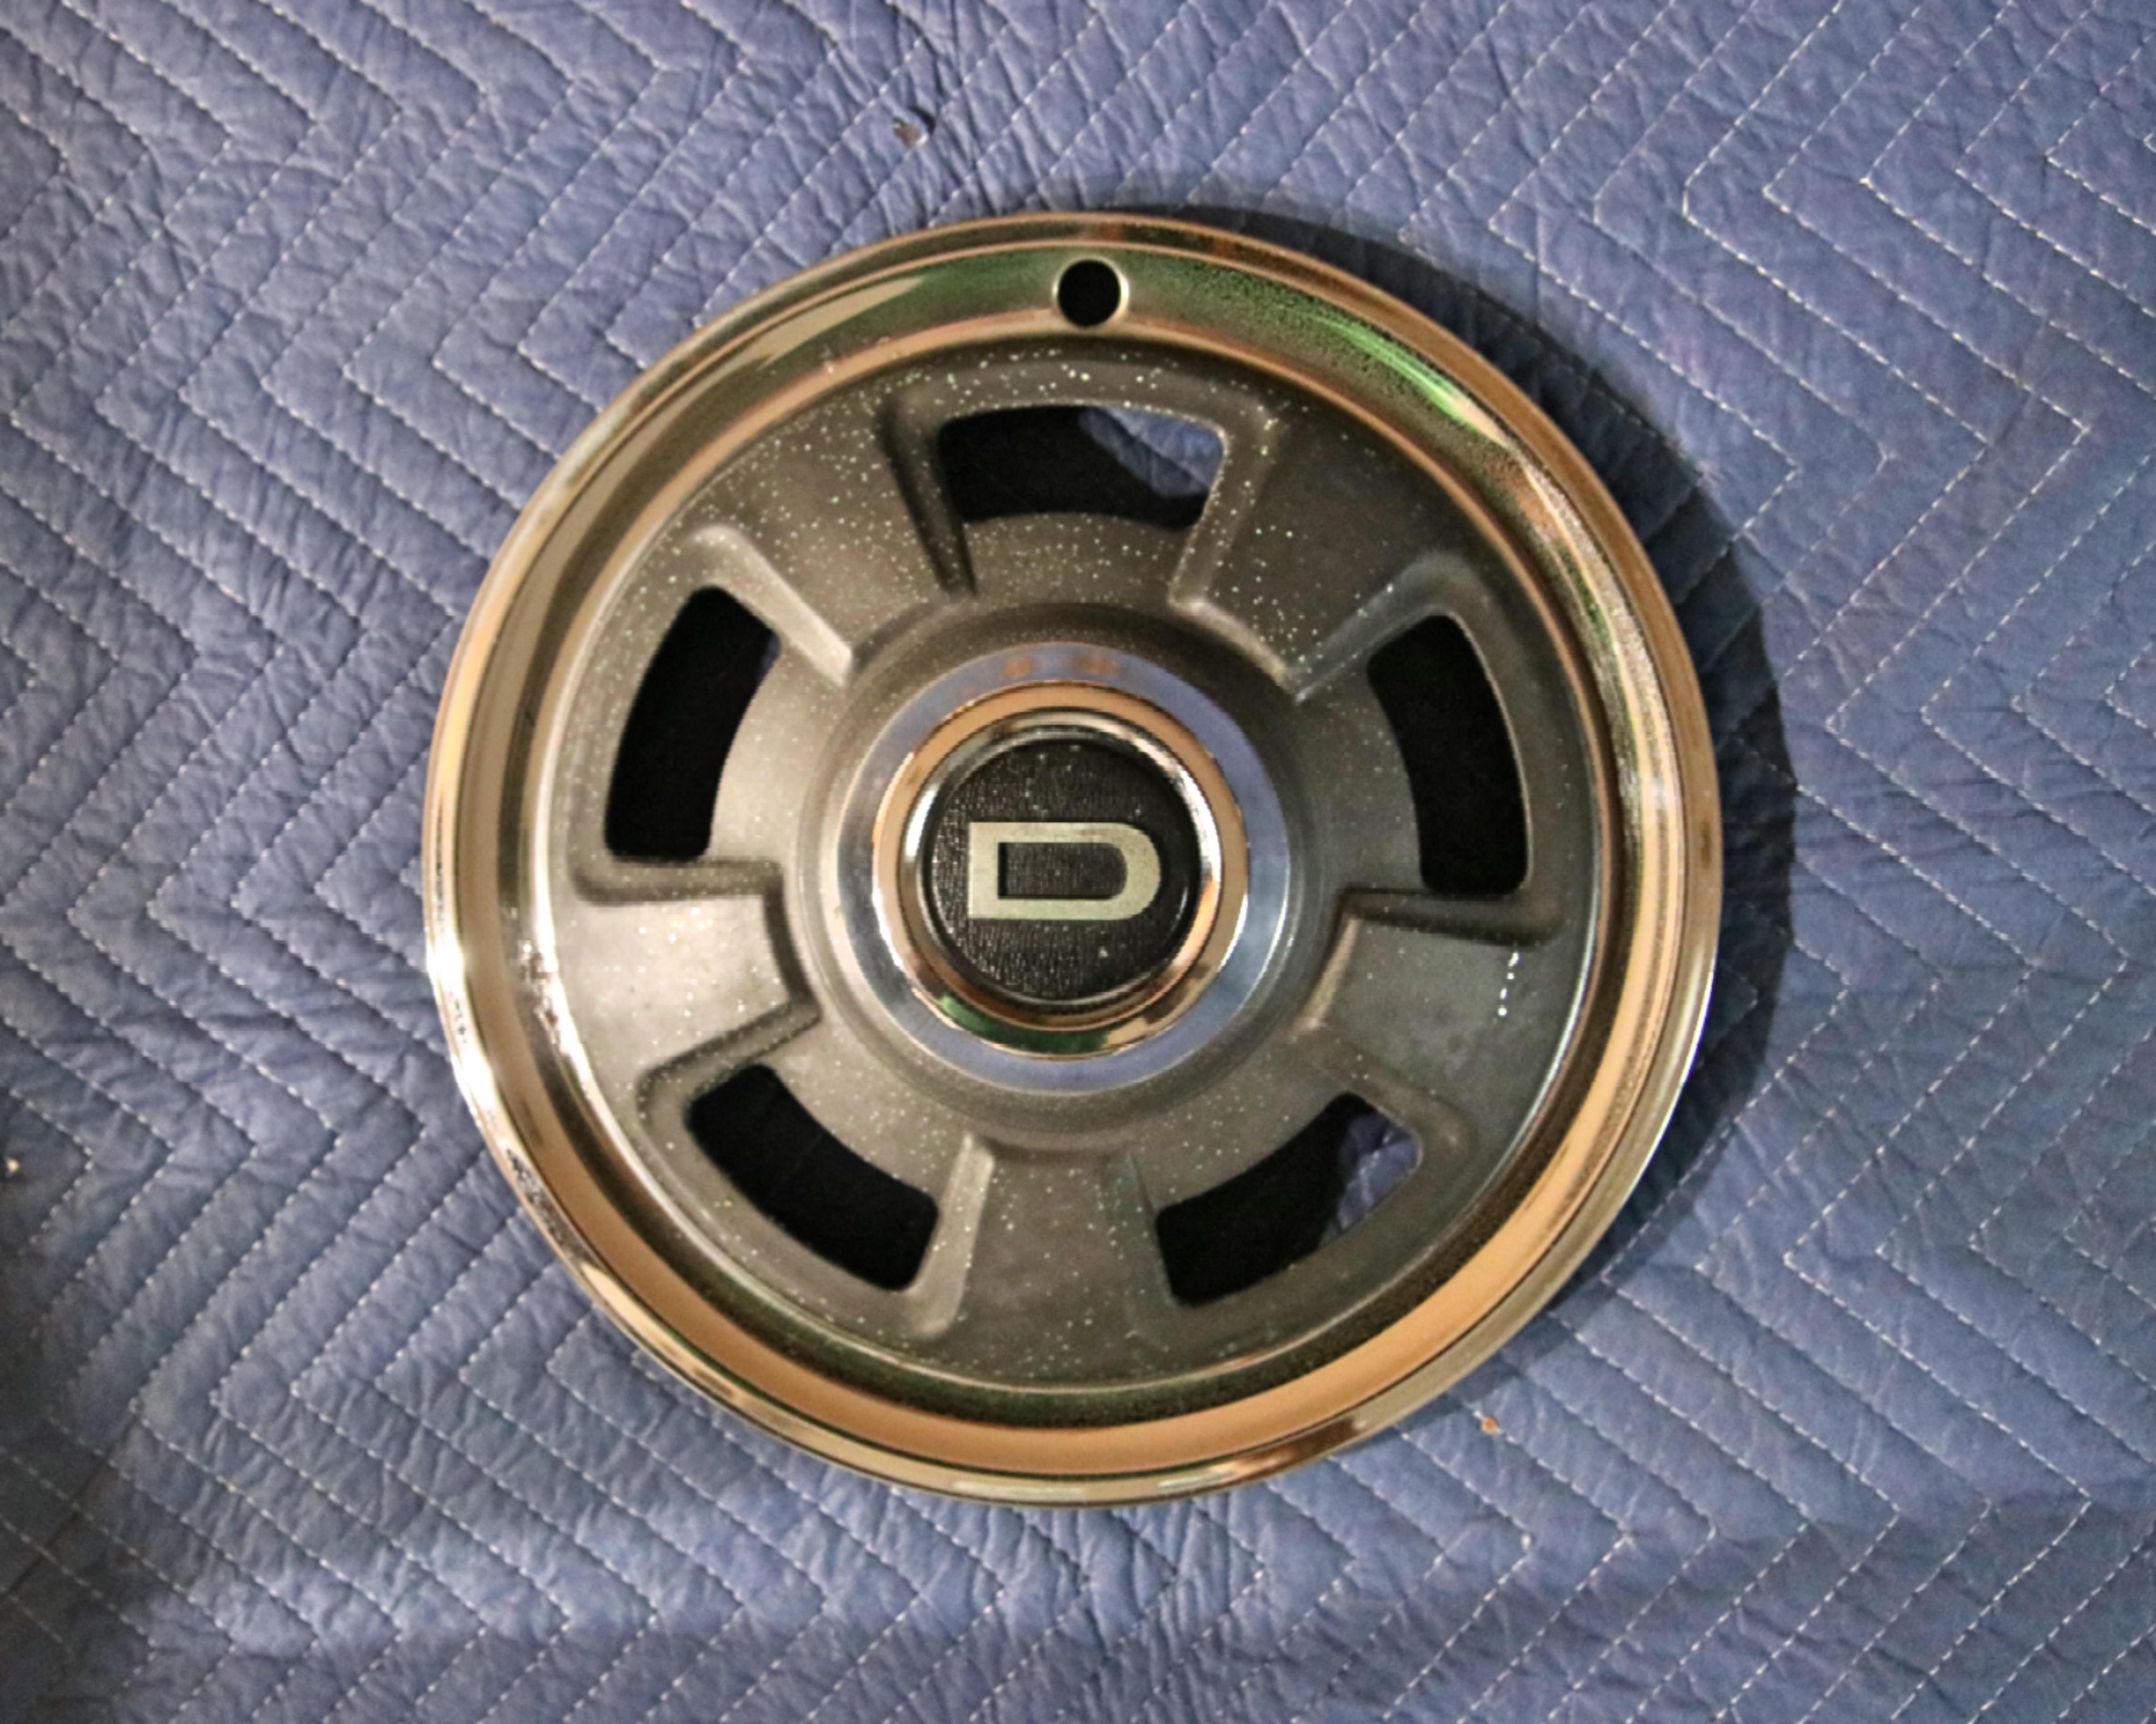 Datsun 240Z set of four hubcaps